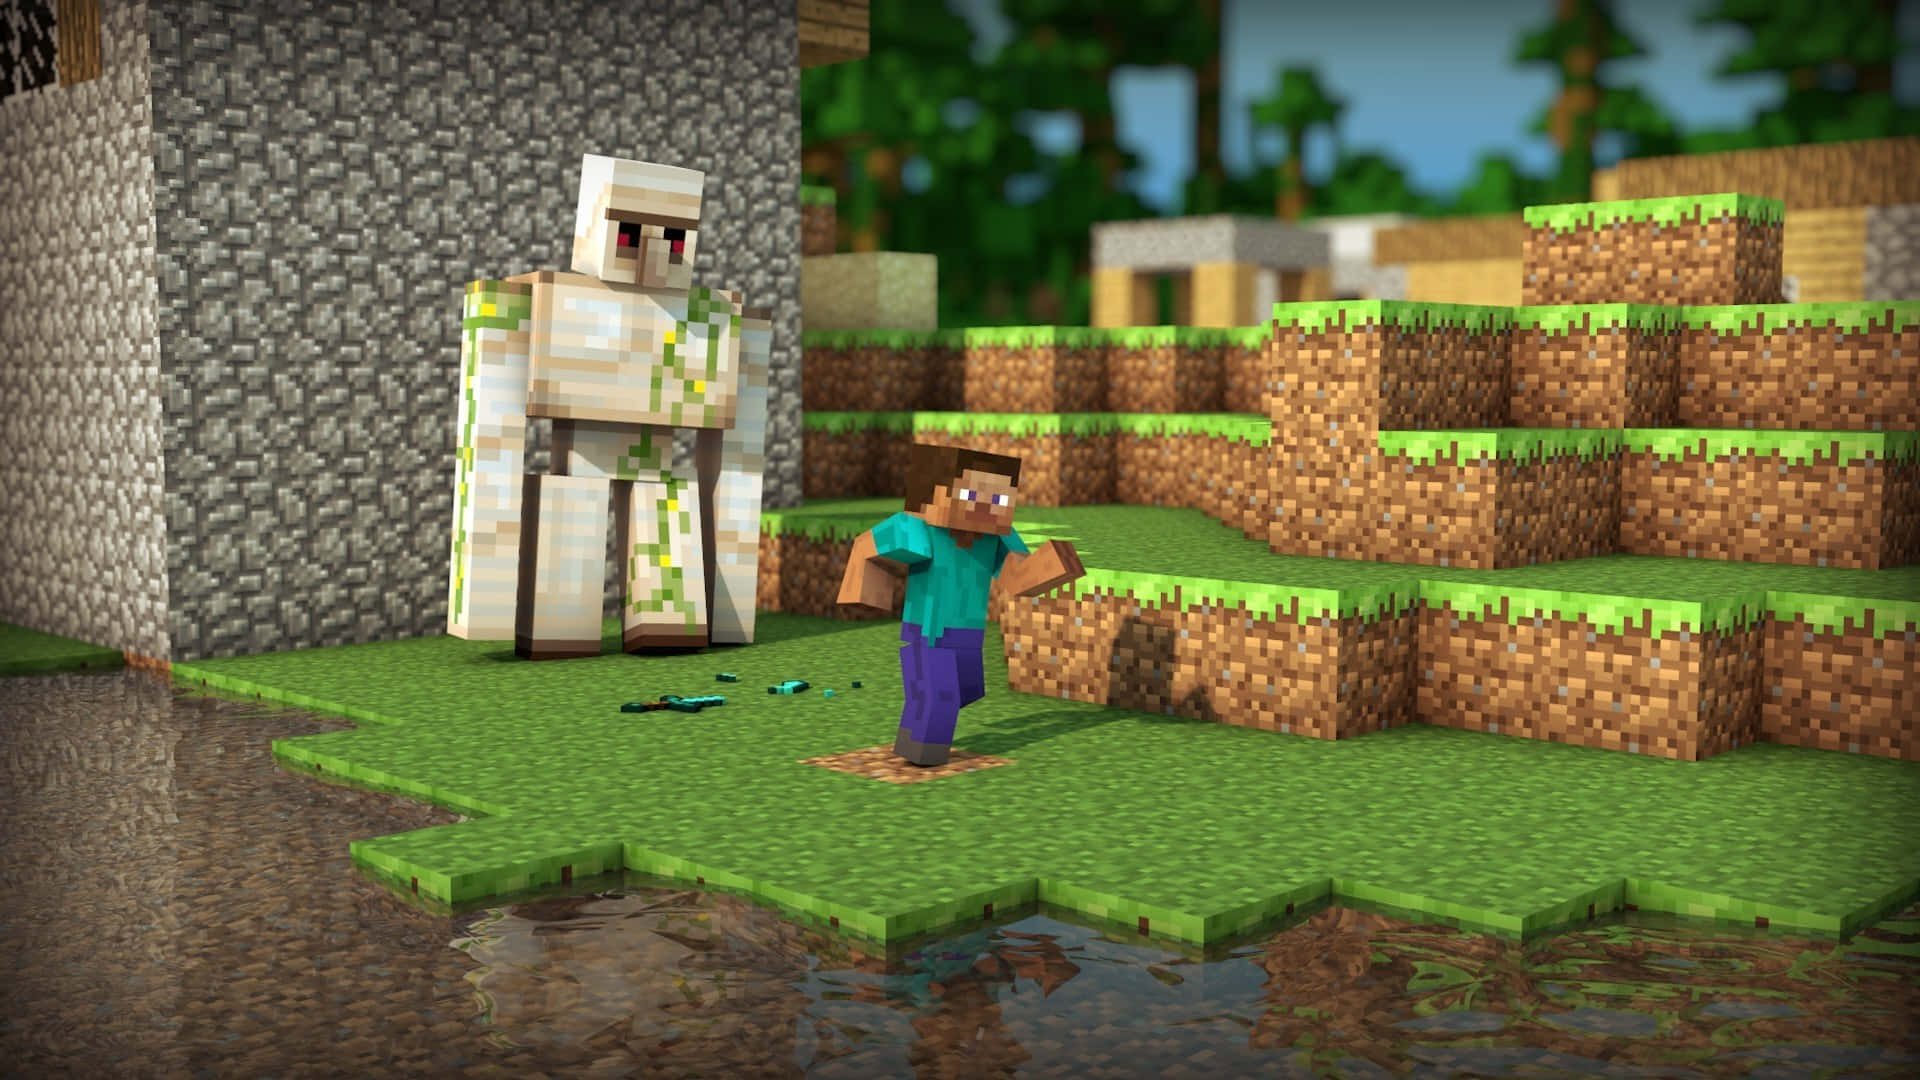 Mighty Minecraft Iron Golem guarding the village Wallpaper